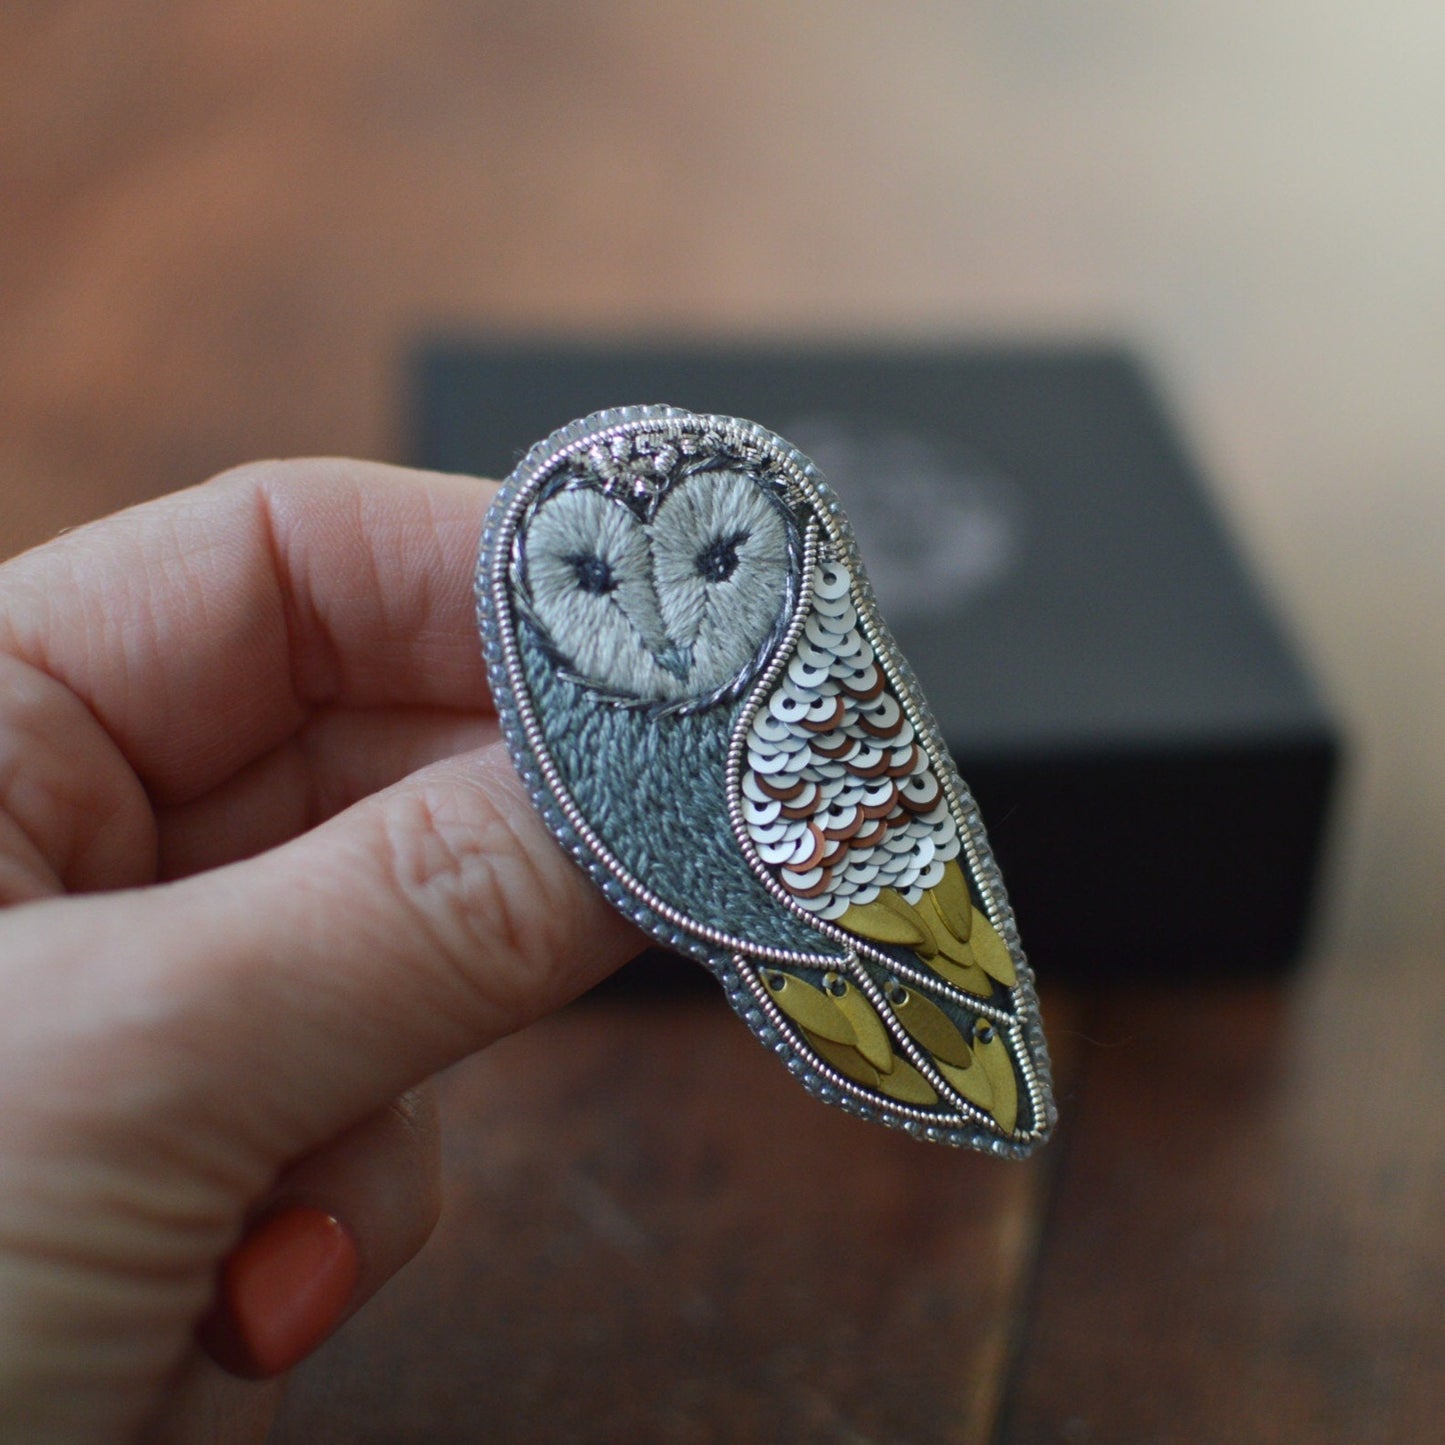 Silver barn owl brooch